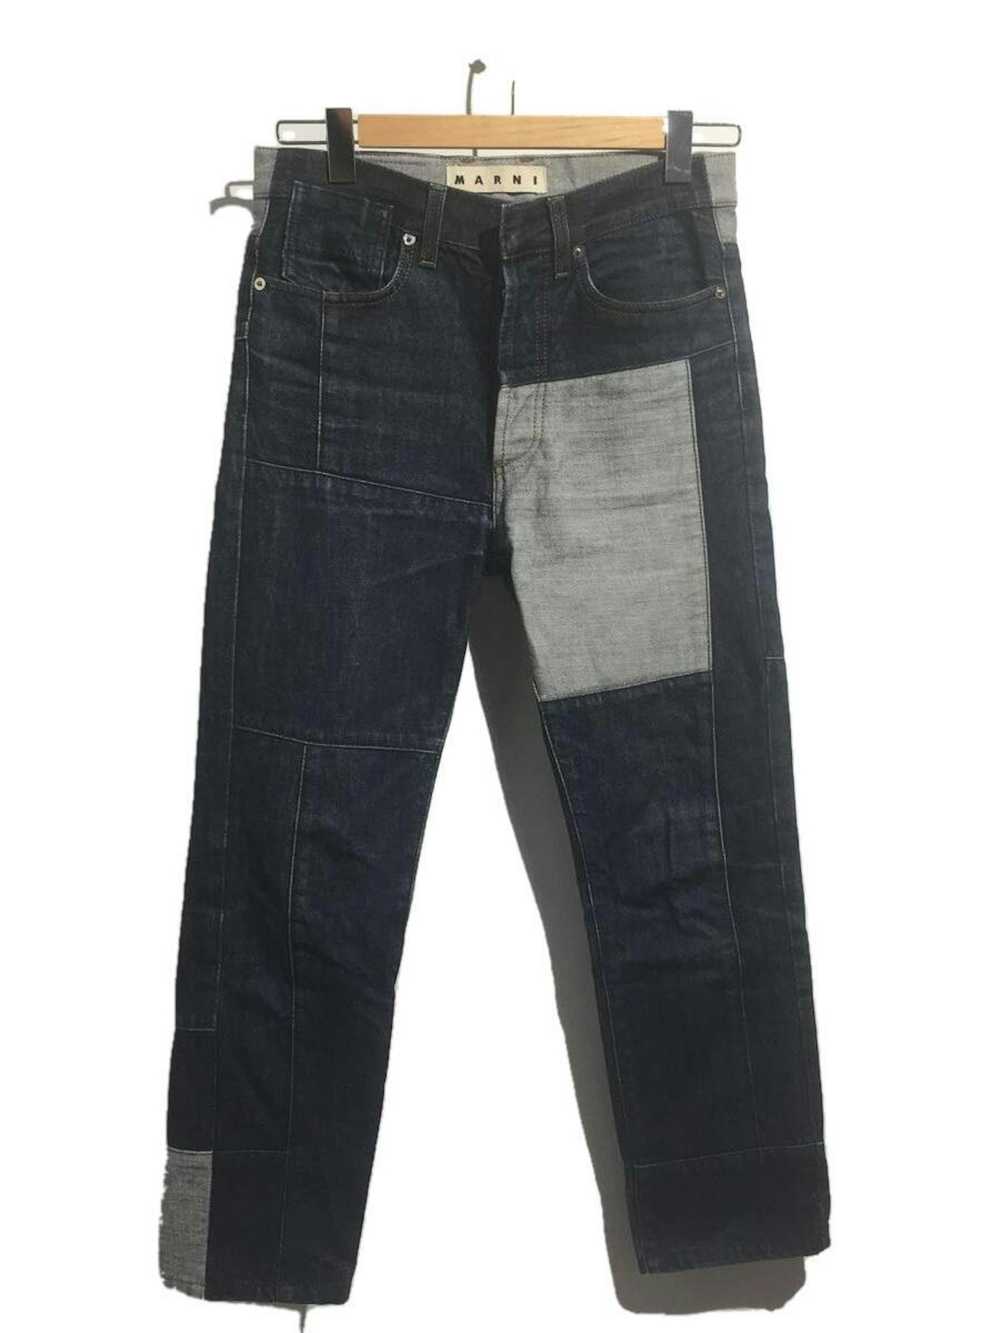 Marni SS15 Patchwork Denim Jeans - image 1